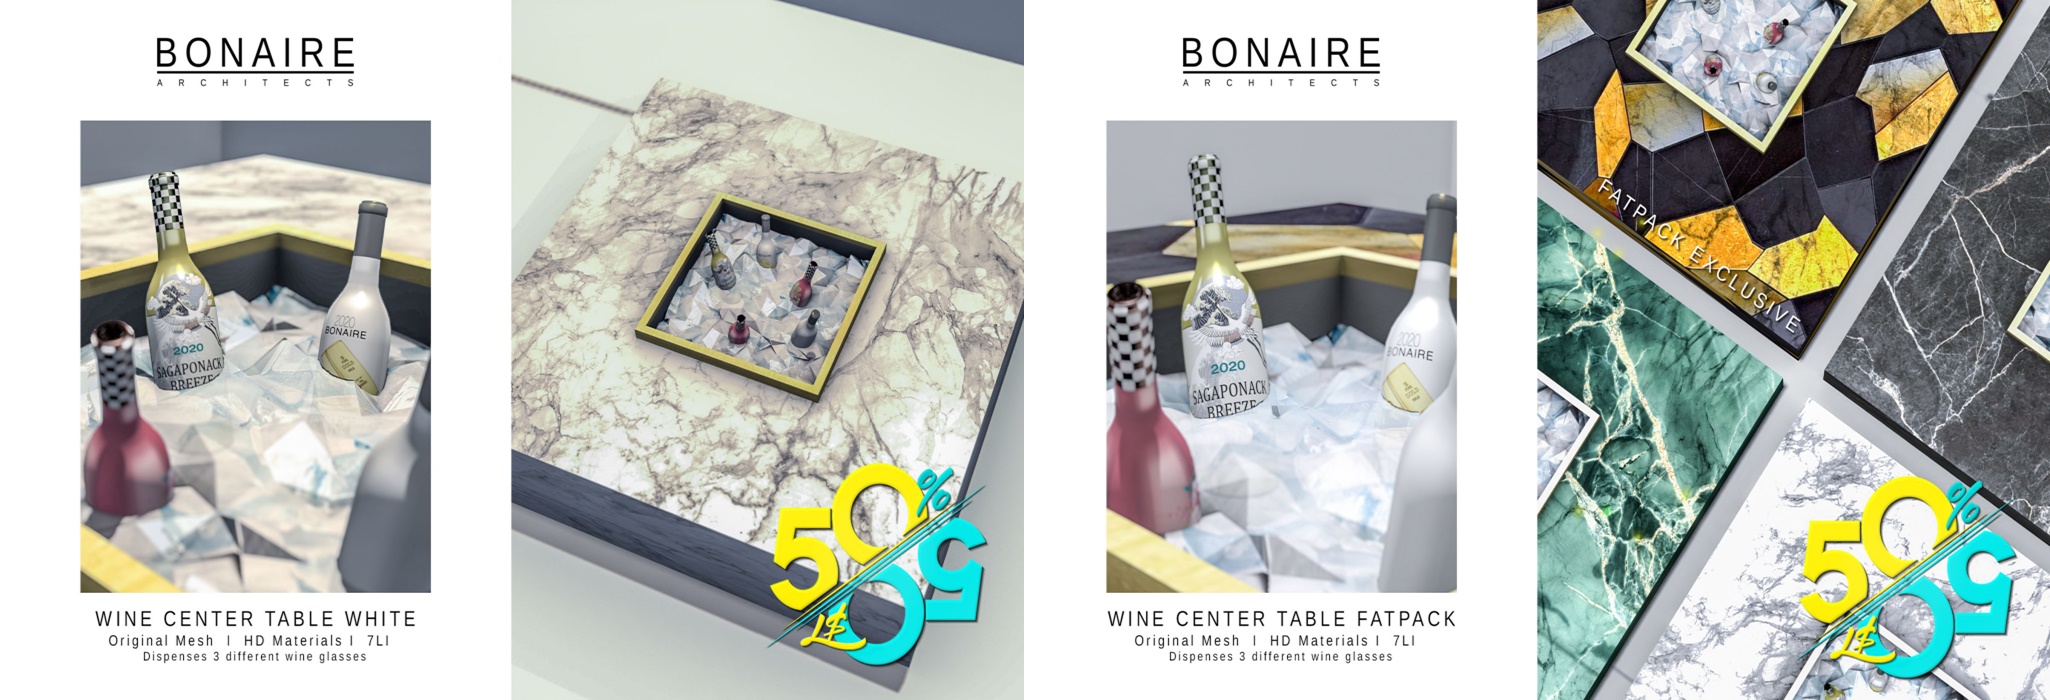 Bonaire – Wine Center Table